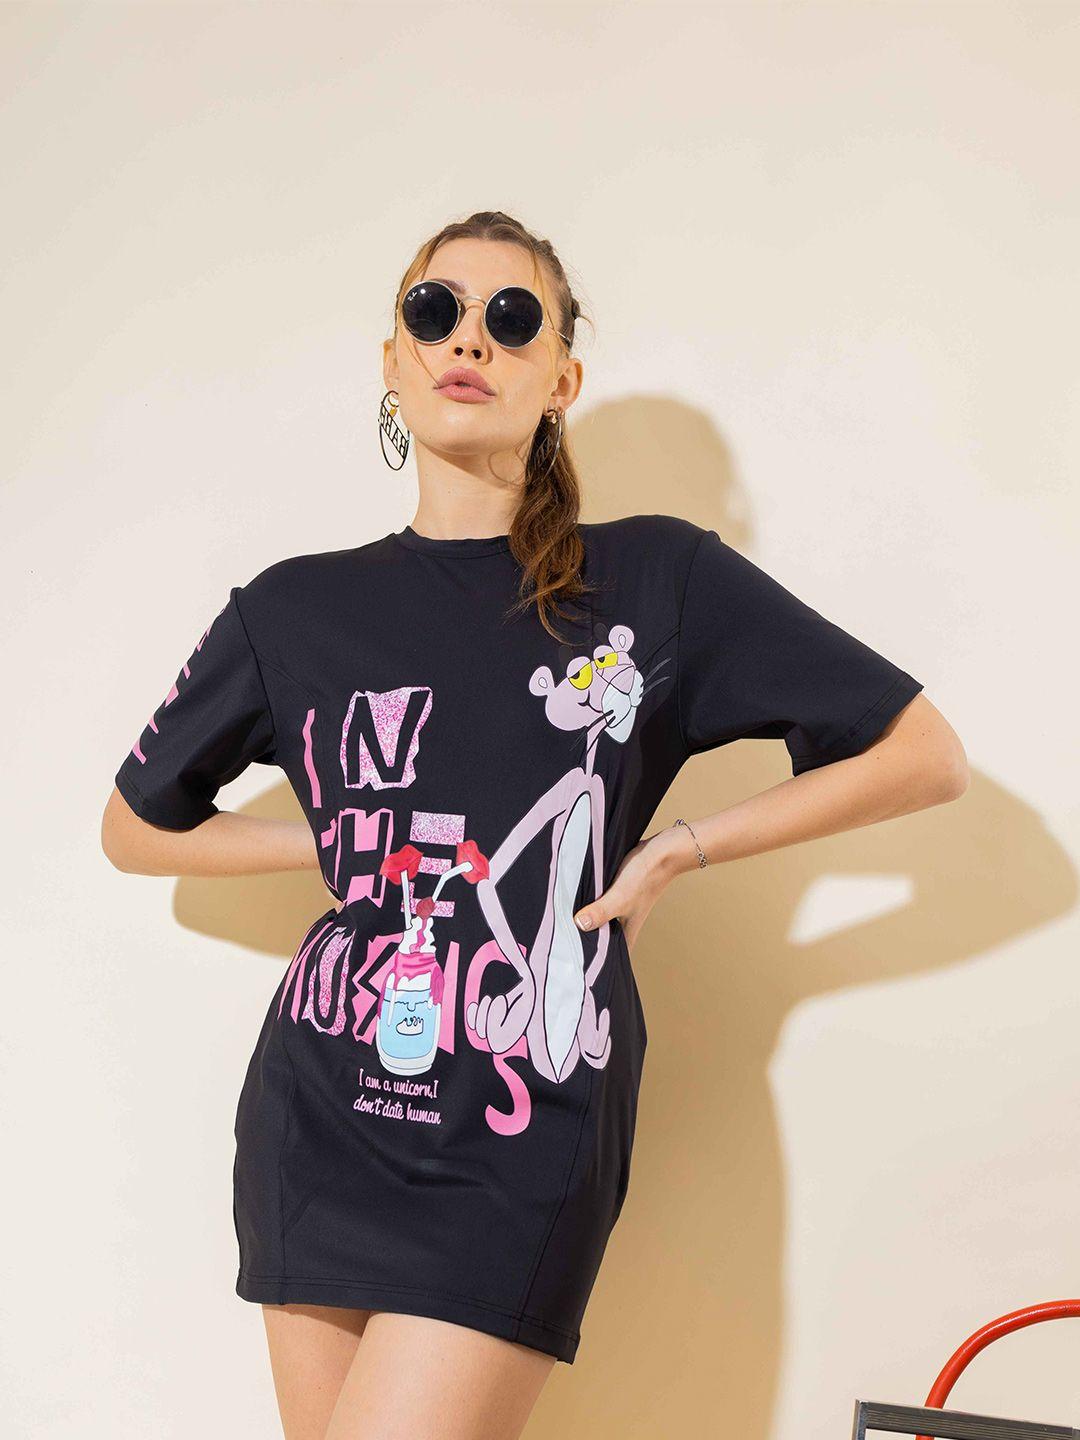 stylecast x hersheinbox navy blue pink panther printed cotton t-shirt mini dresses